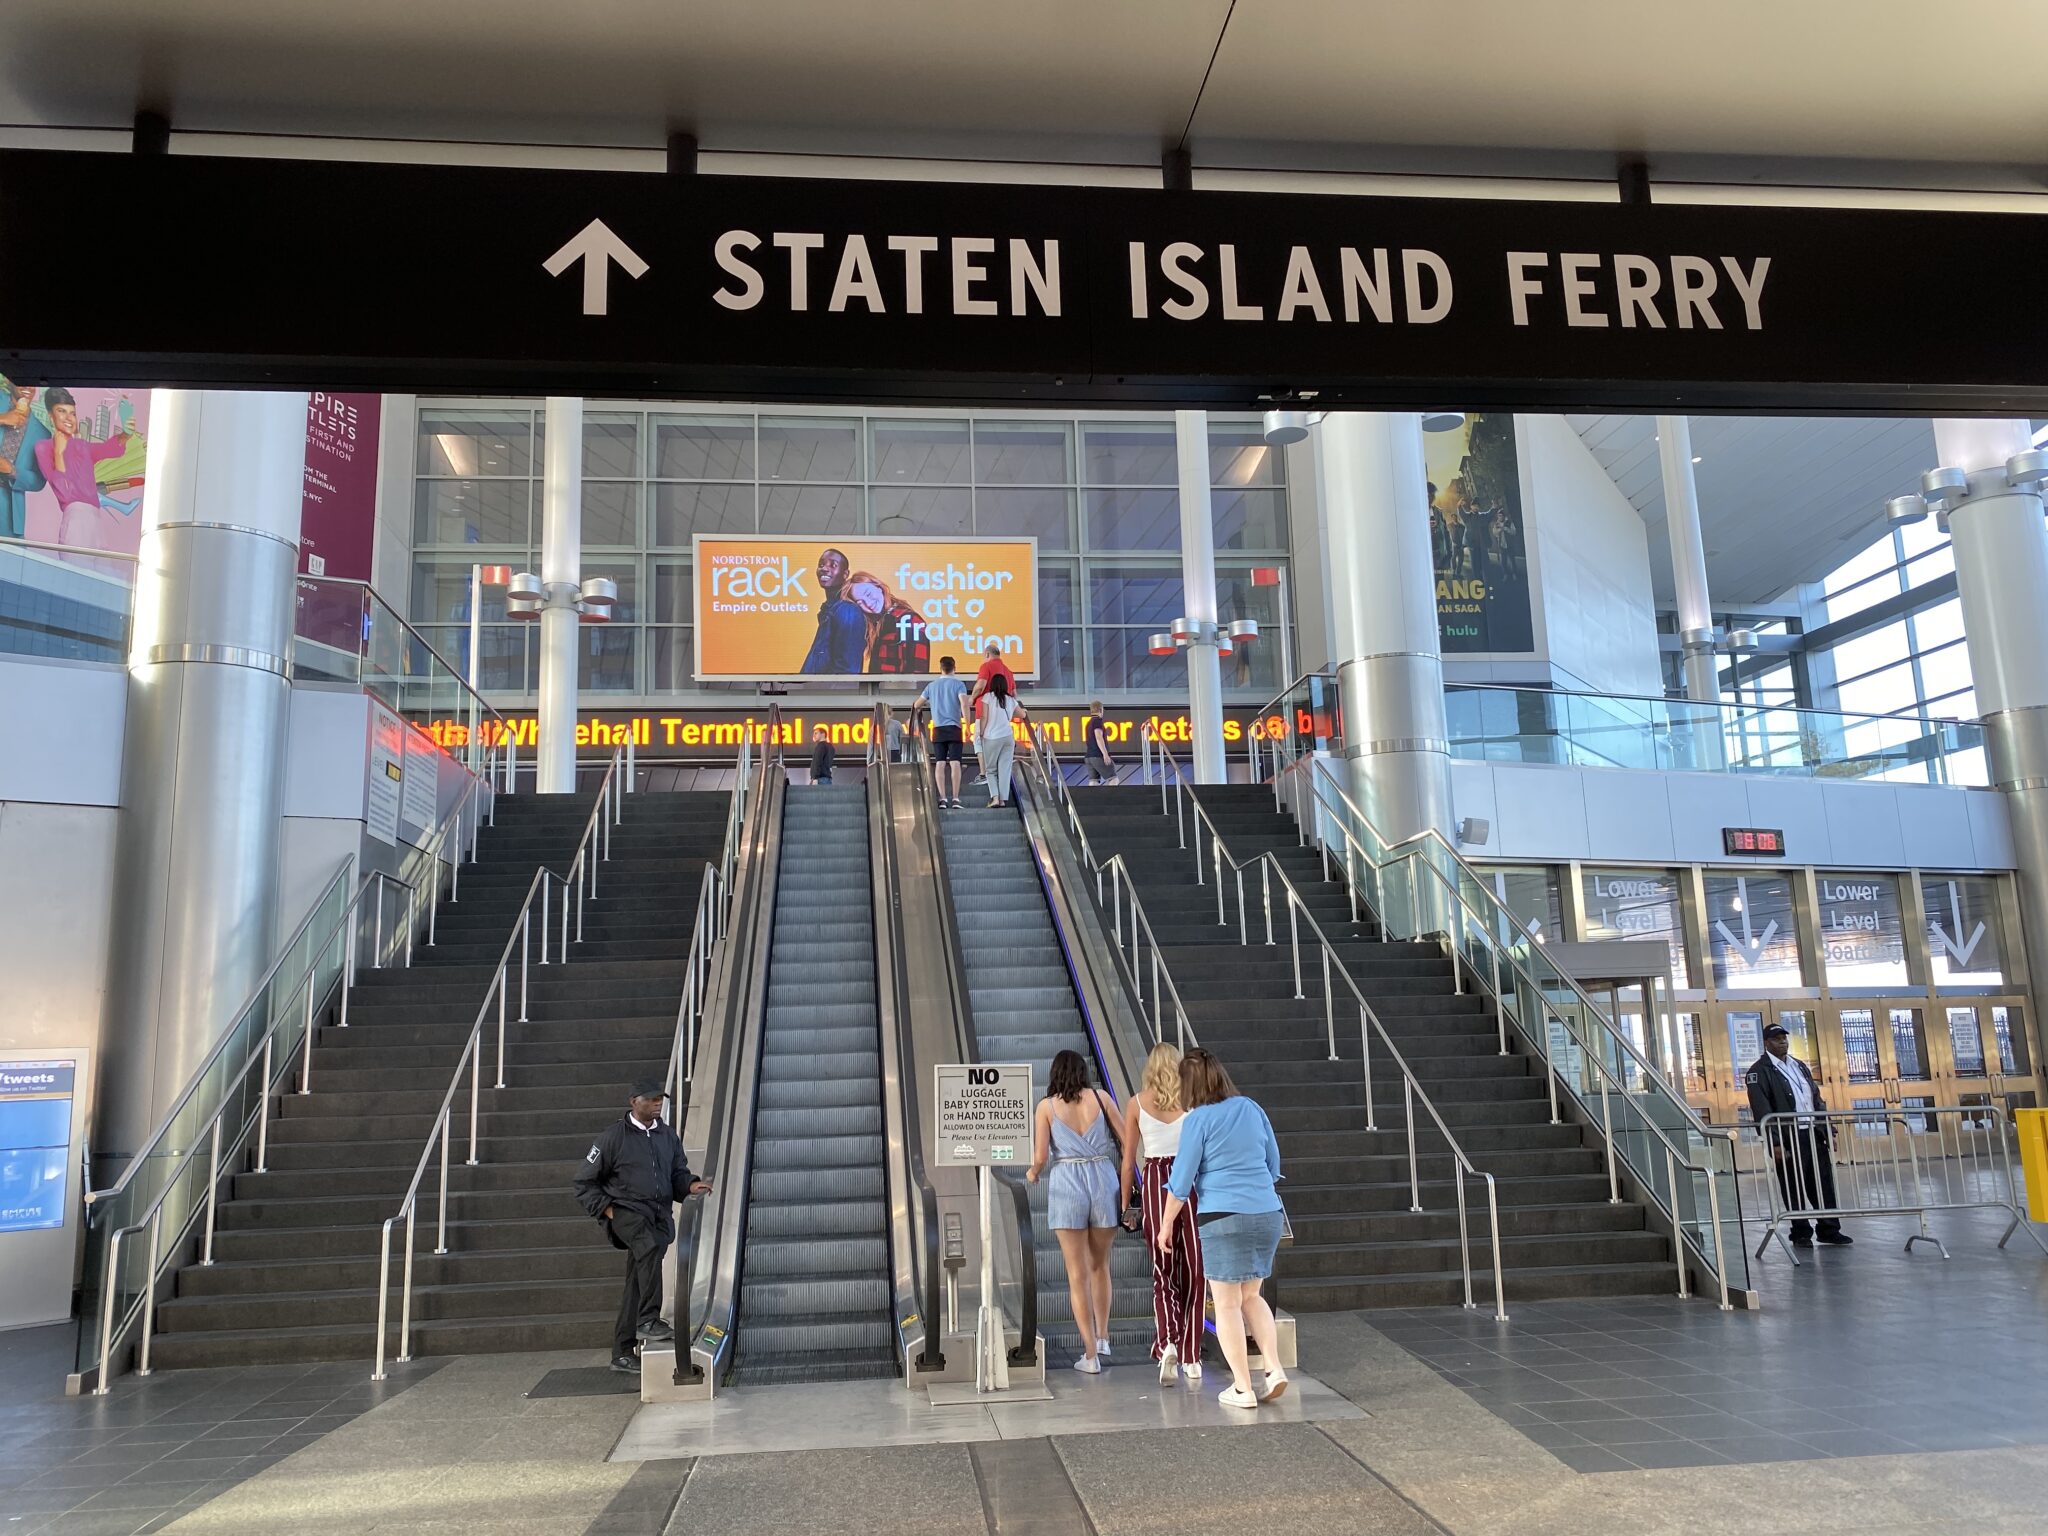 【NY観光】Wu-Tang Clanの地元Staten Island、『スタテンアイランドフェリー』で自由の女神を眺めるニューヨーク無料観光